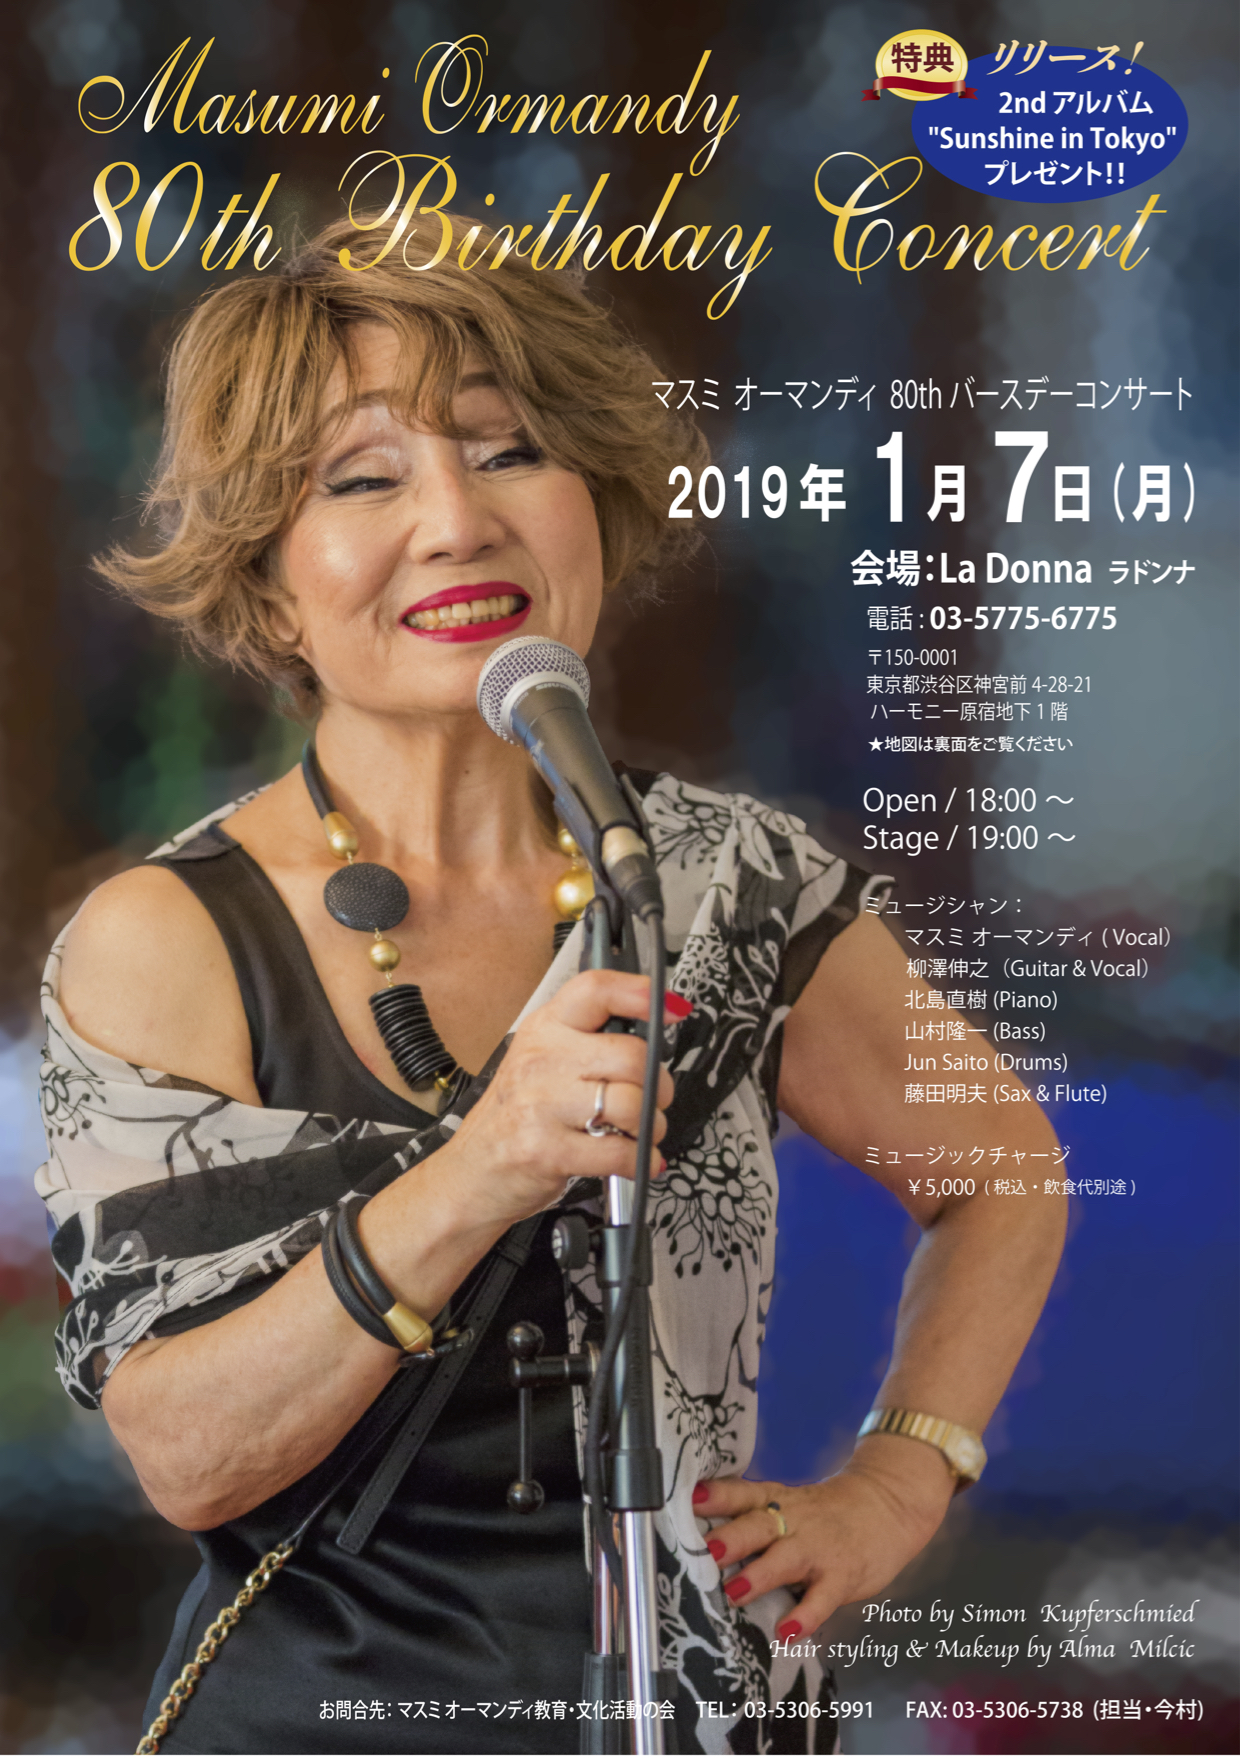 Masumi Ormandy 80th Birthday Concert